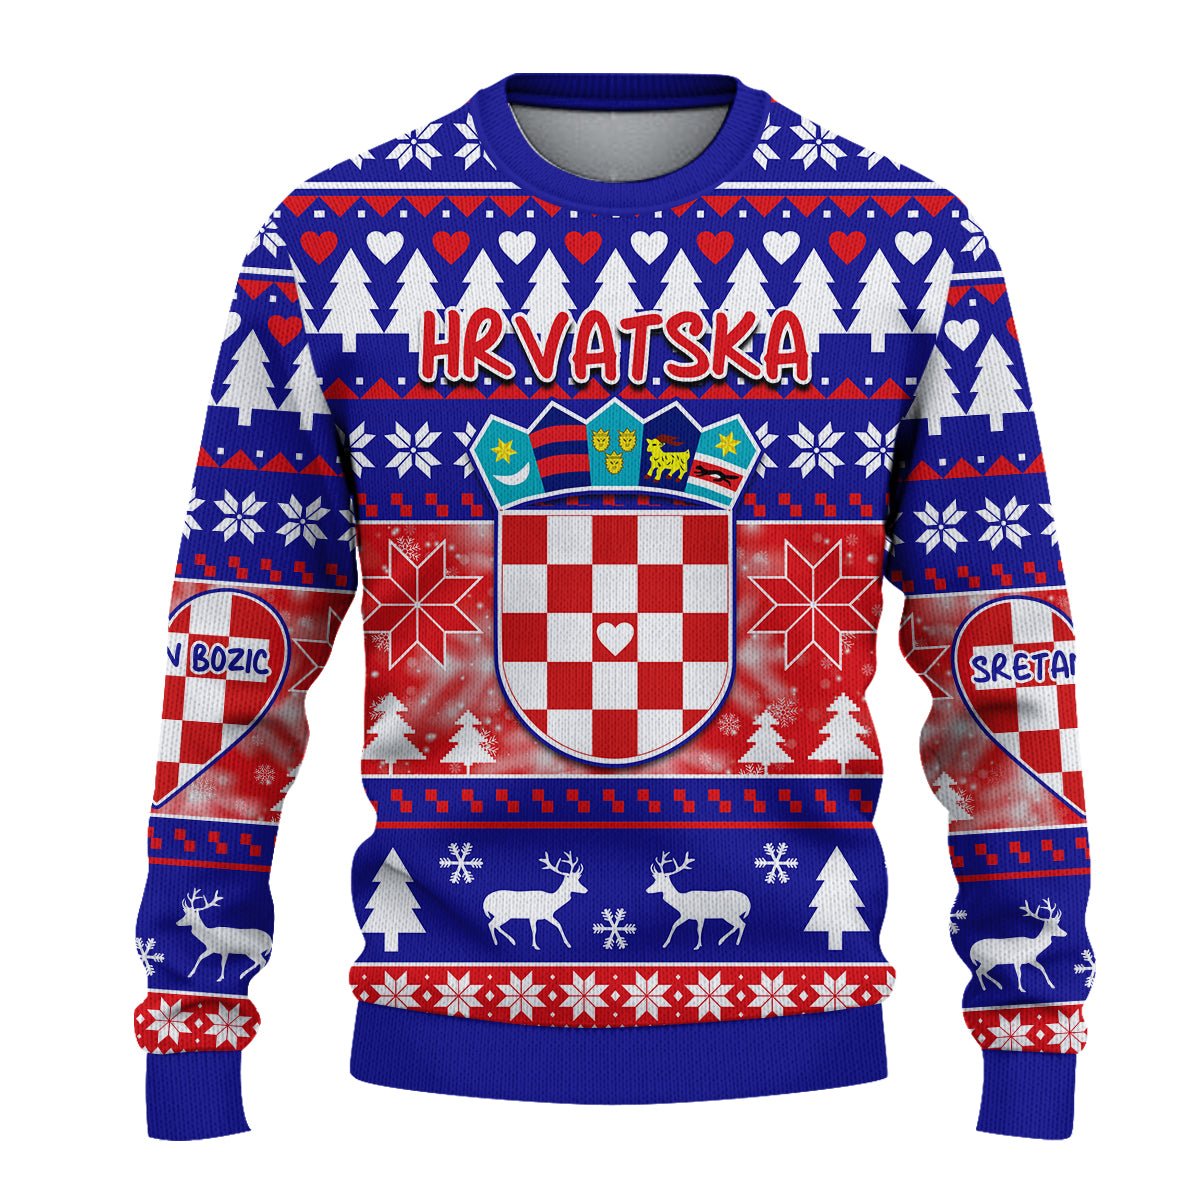 (Custom Personalised) Croatia Merry Christmas Knitted Sweater - Sretan Bozic Hrvatska In My Heart LT13